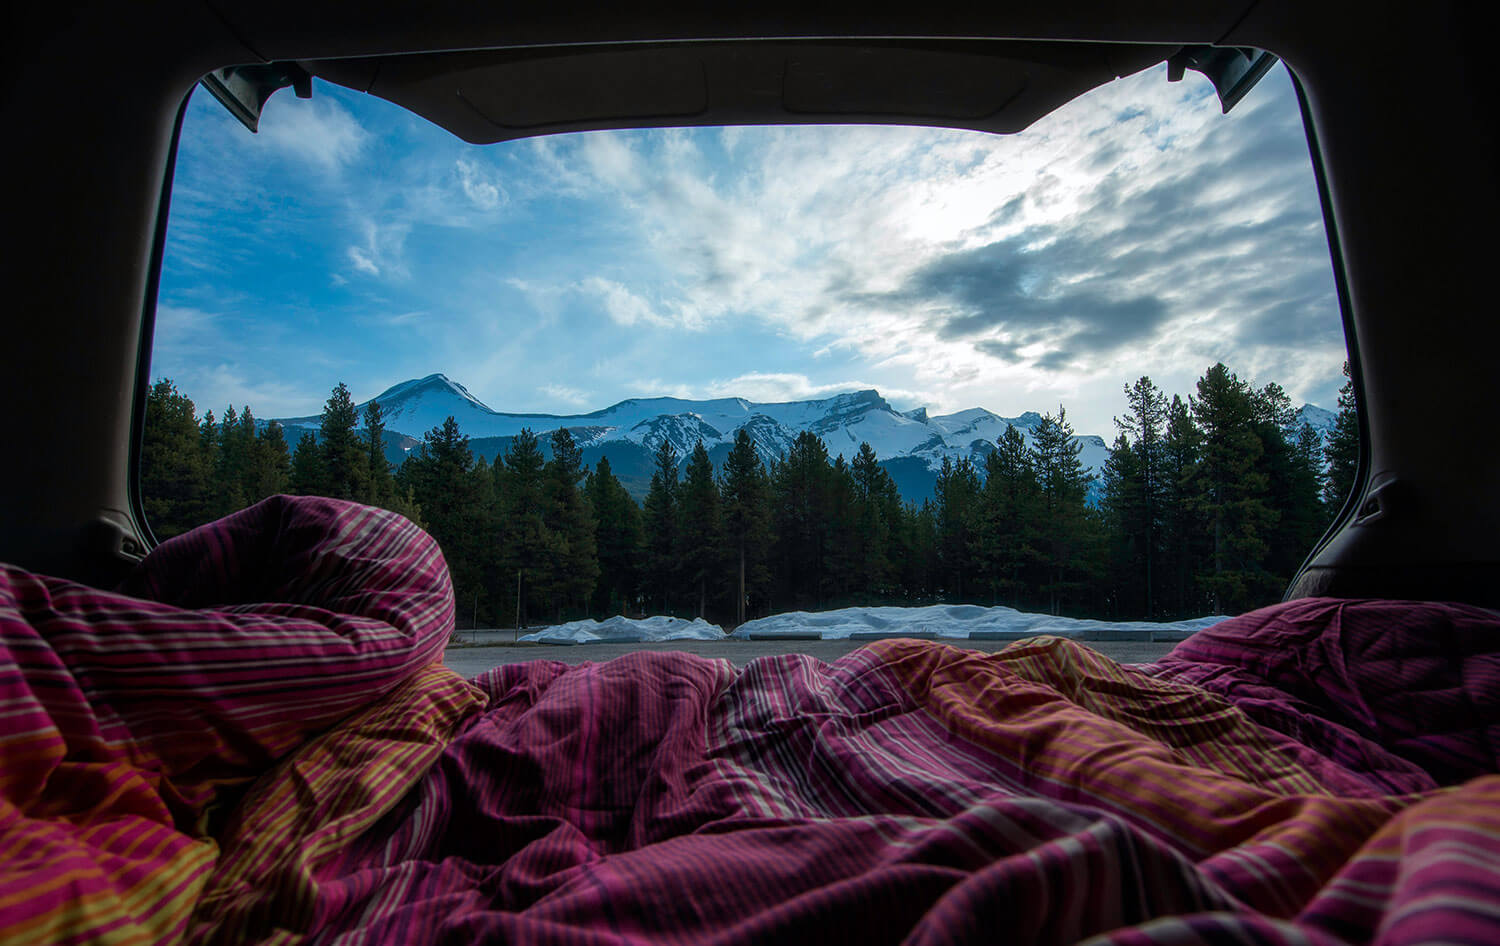 Donde comprar el colchón de tu furgoneta camper - Van Travellers